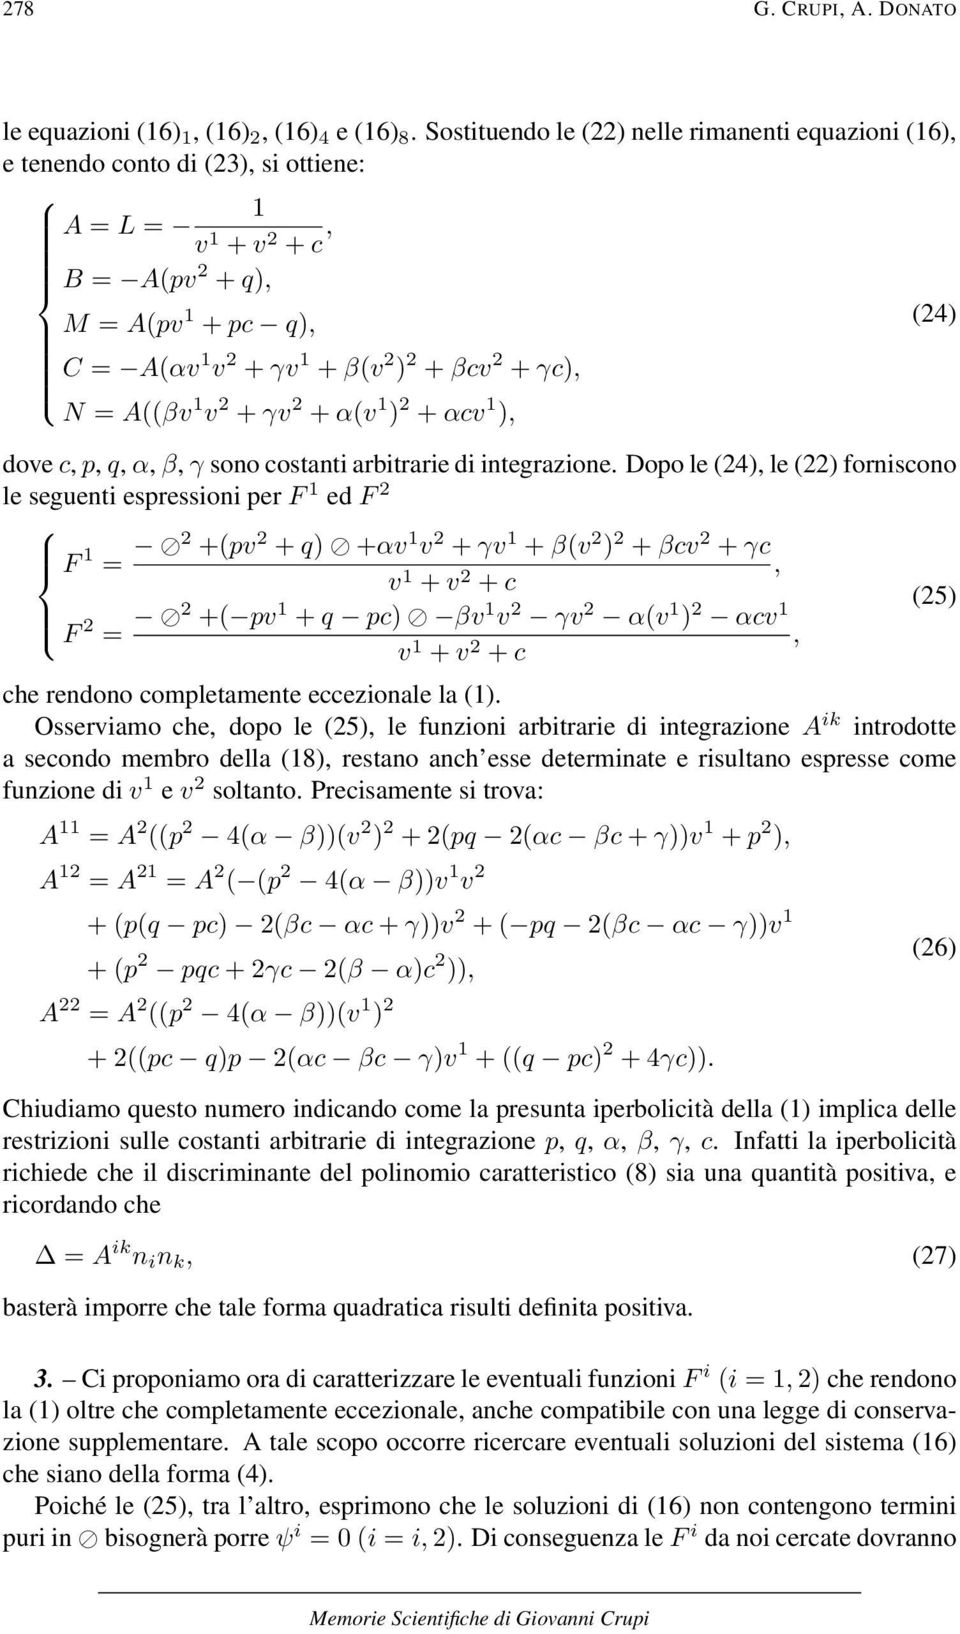 αcv ), dove c, p, q, α, β, γ sono costant arbtrare d ntegrazone.